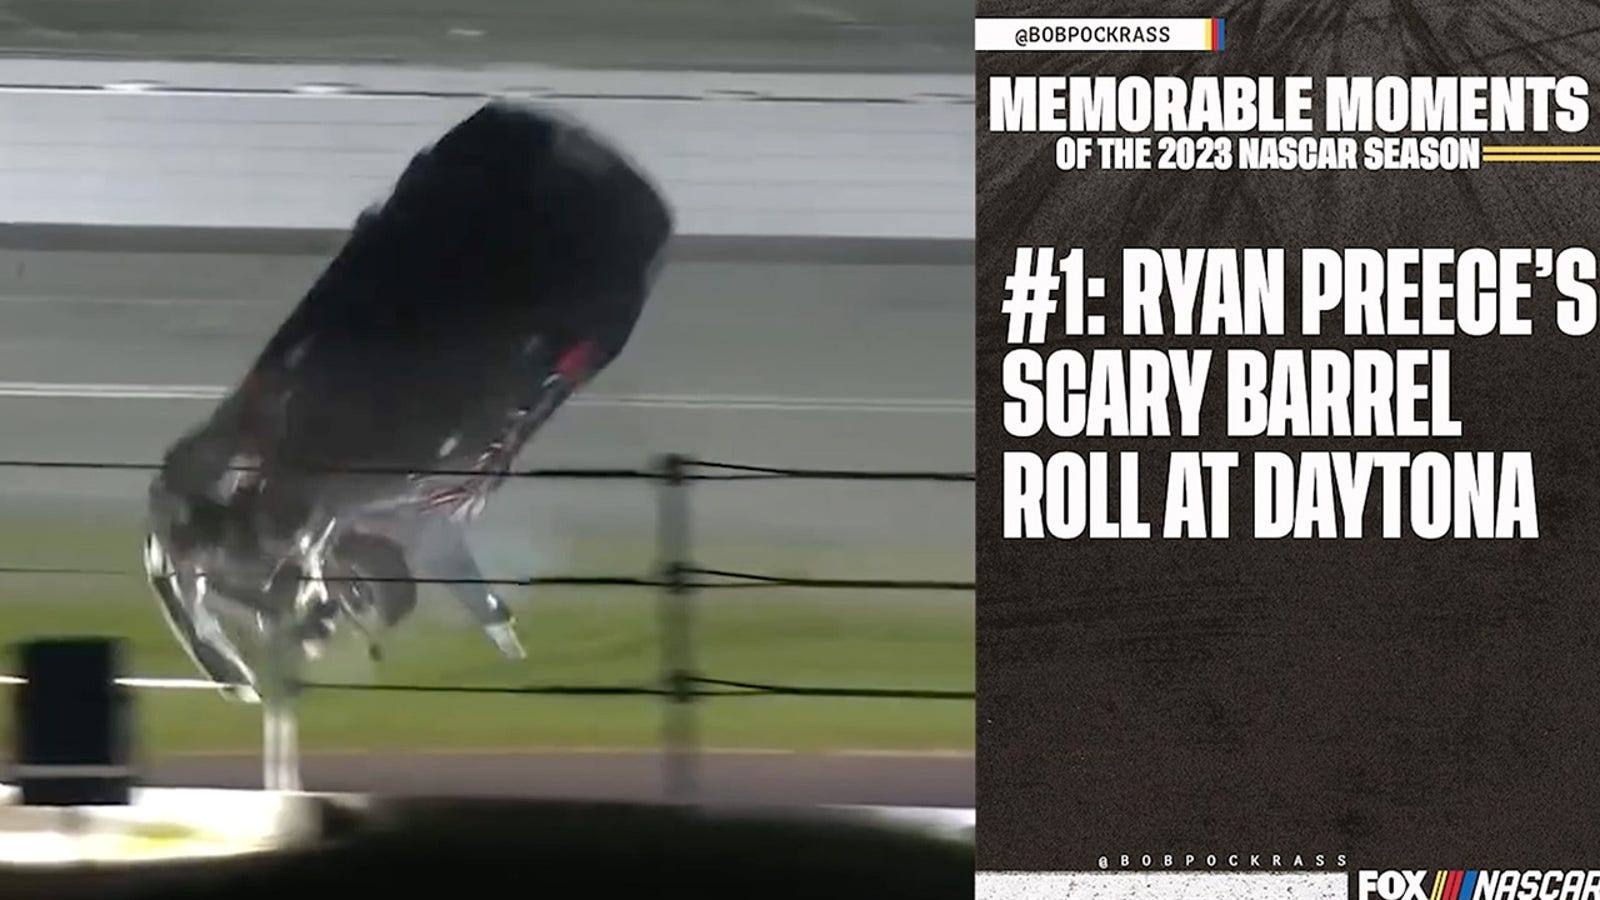 Ryan Preece's scary barrel roll at Daytona | Most Memorable Moments of 2023 NASCAR Season